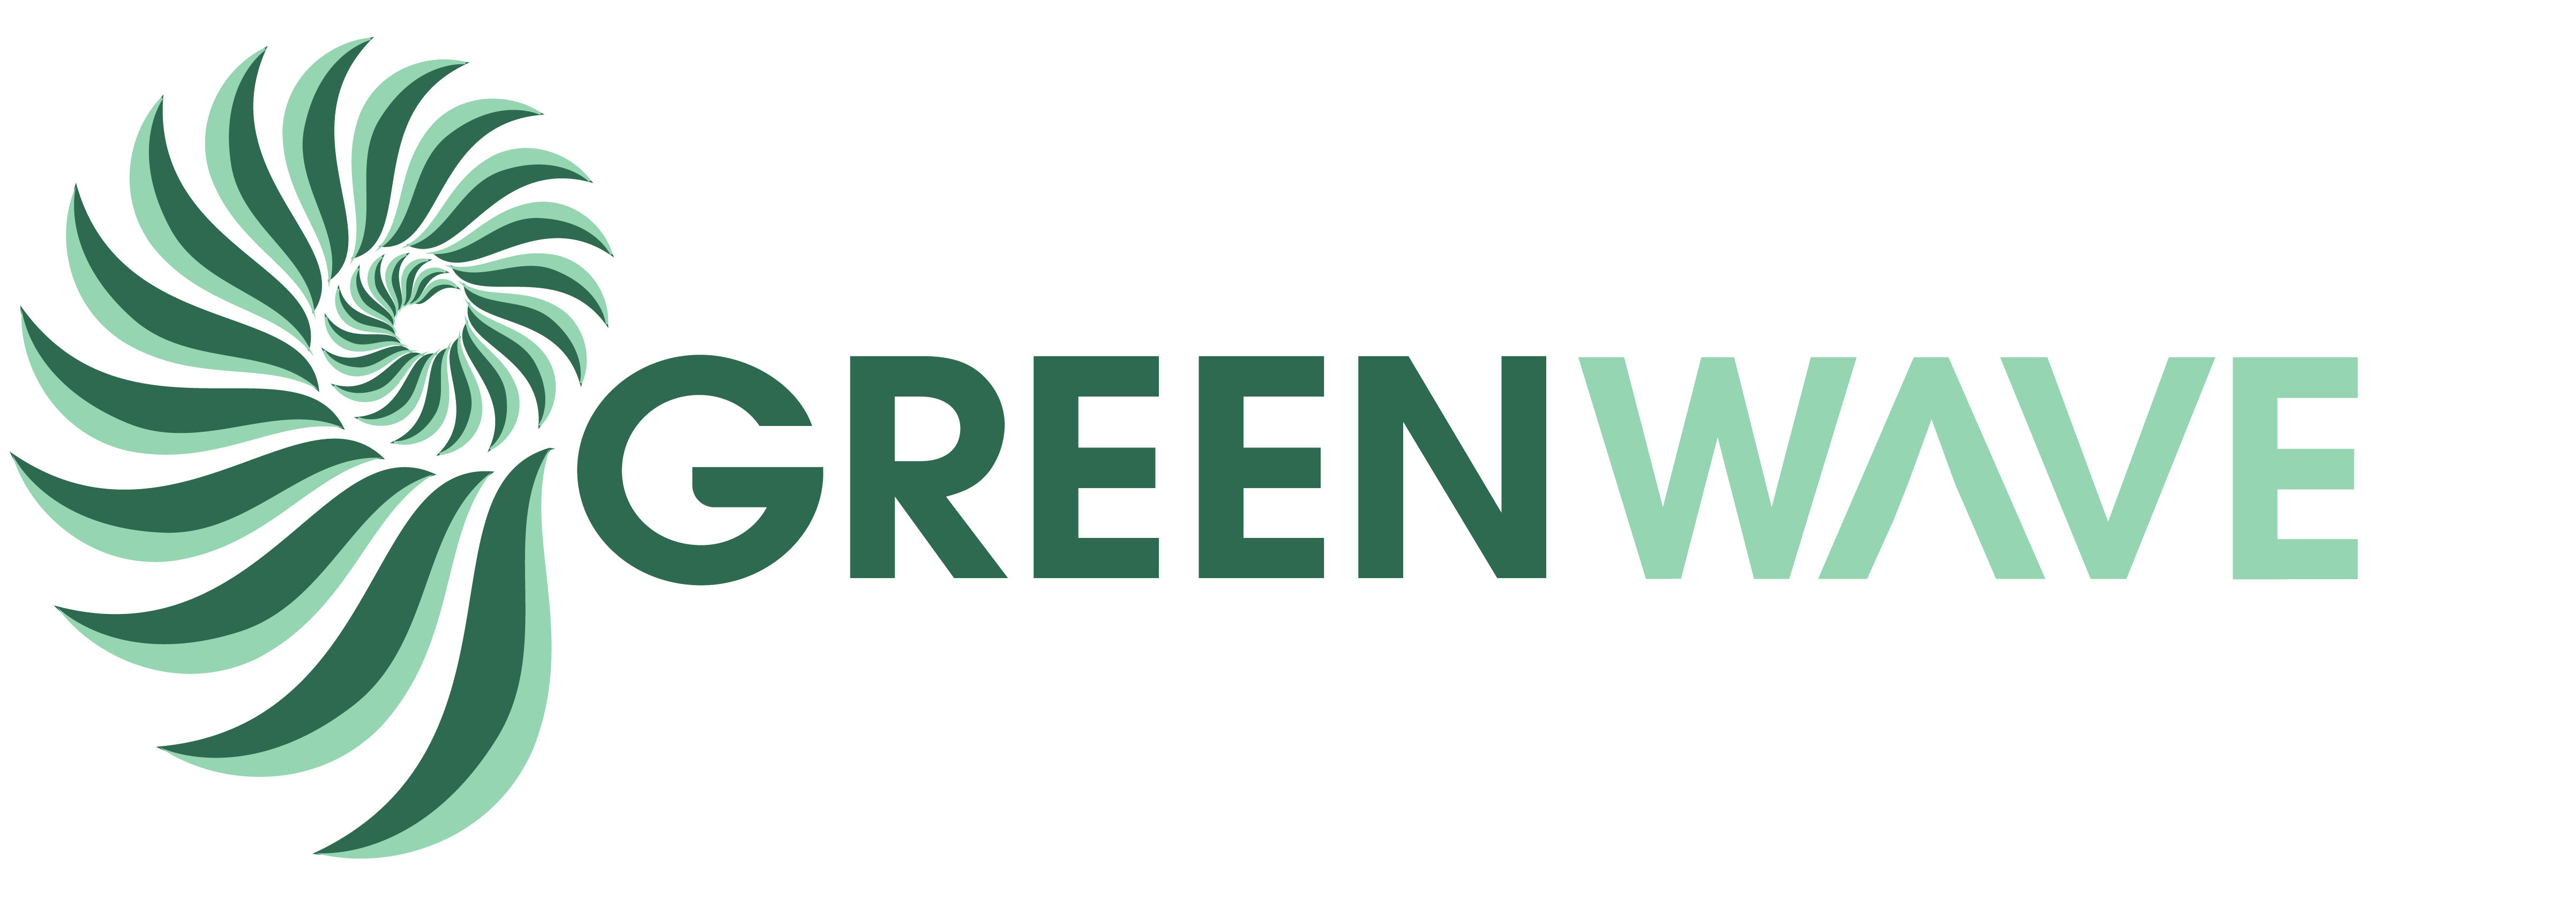 GW Final Logos_Green Greenwave